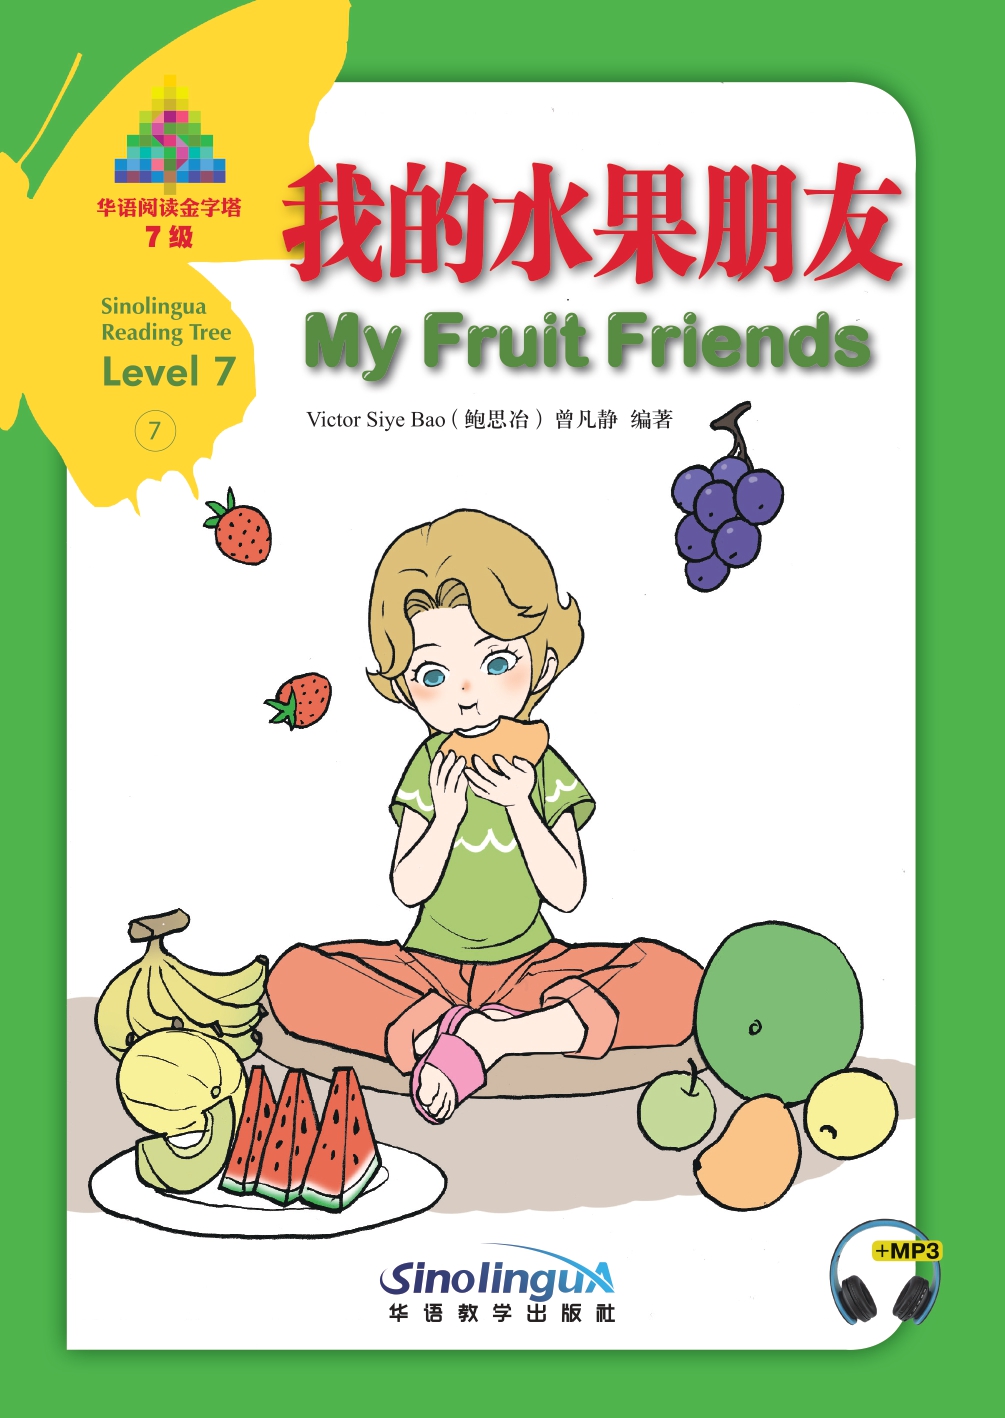 Sinolingua Reading Tree  Level 7 ⑦ My Fruit Friends